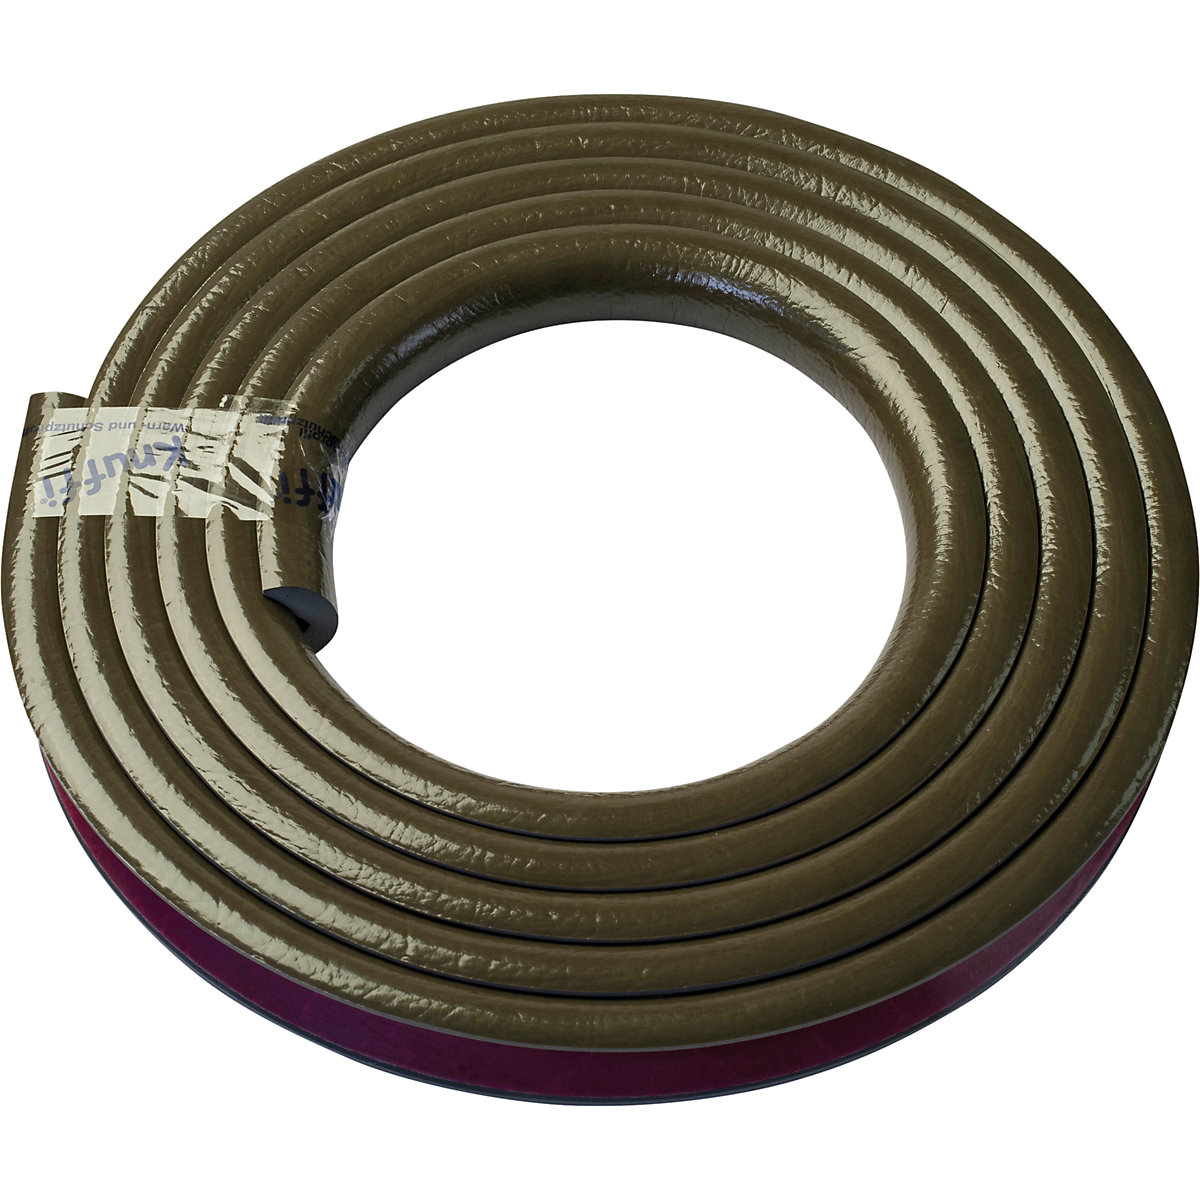 Knuffi® corner protection – SHG, type A, 1 x 5 m roll, khaki-24